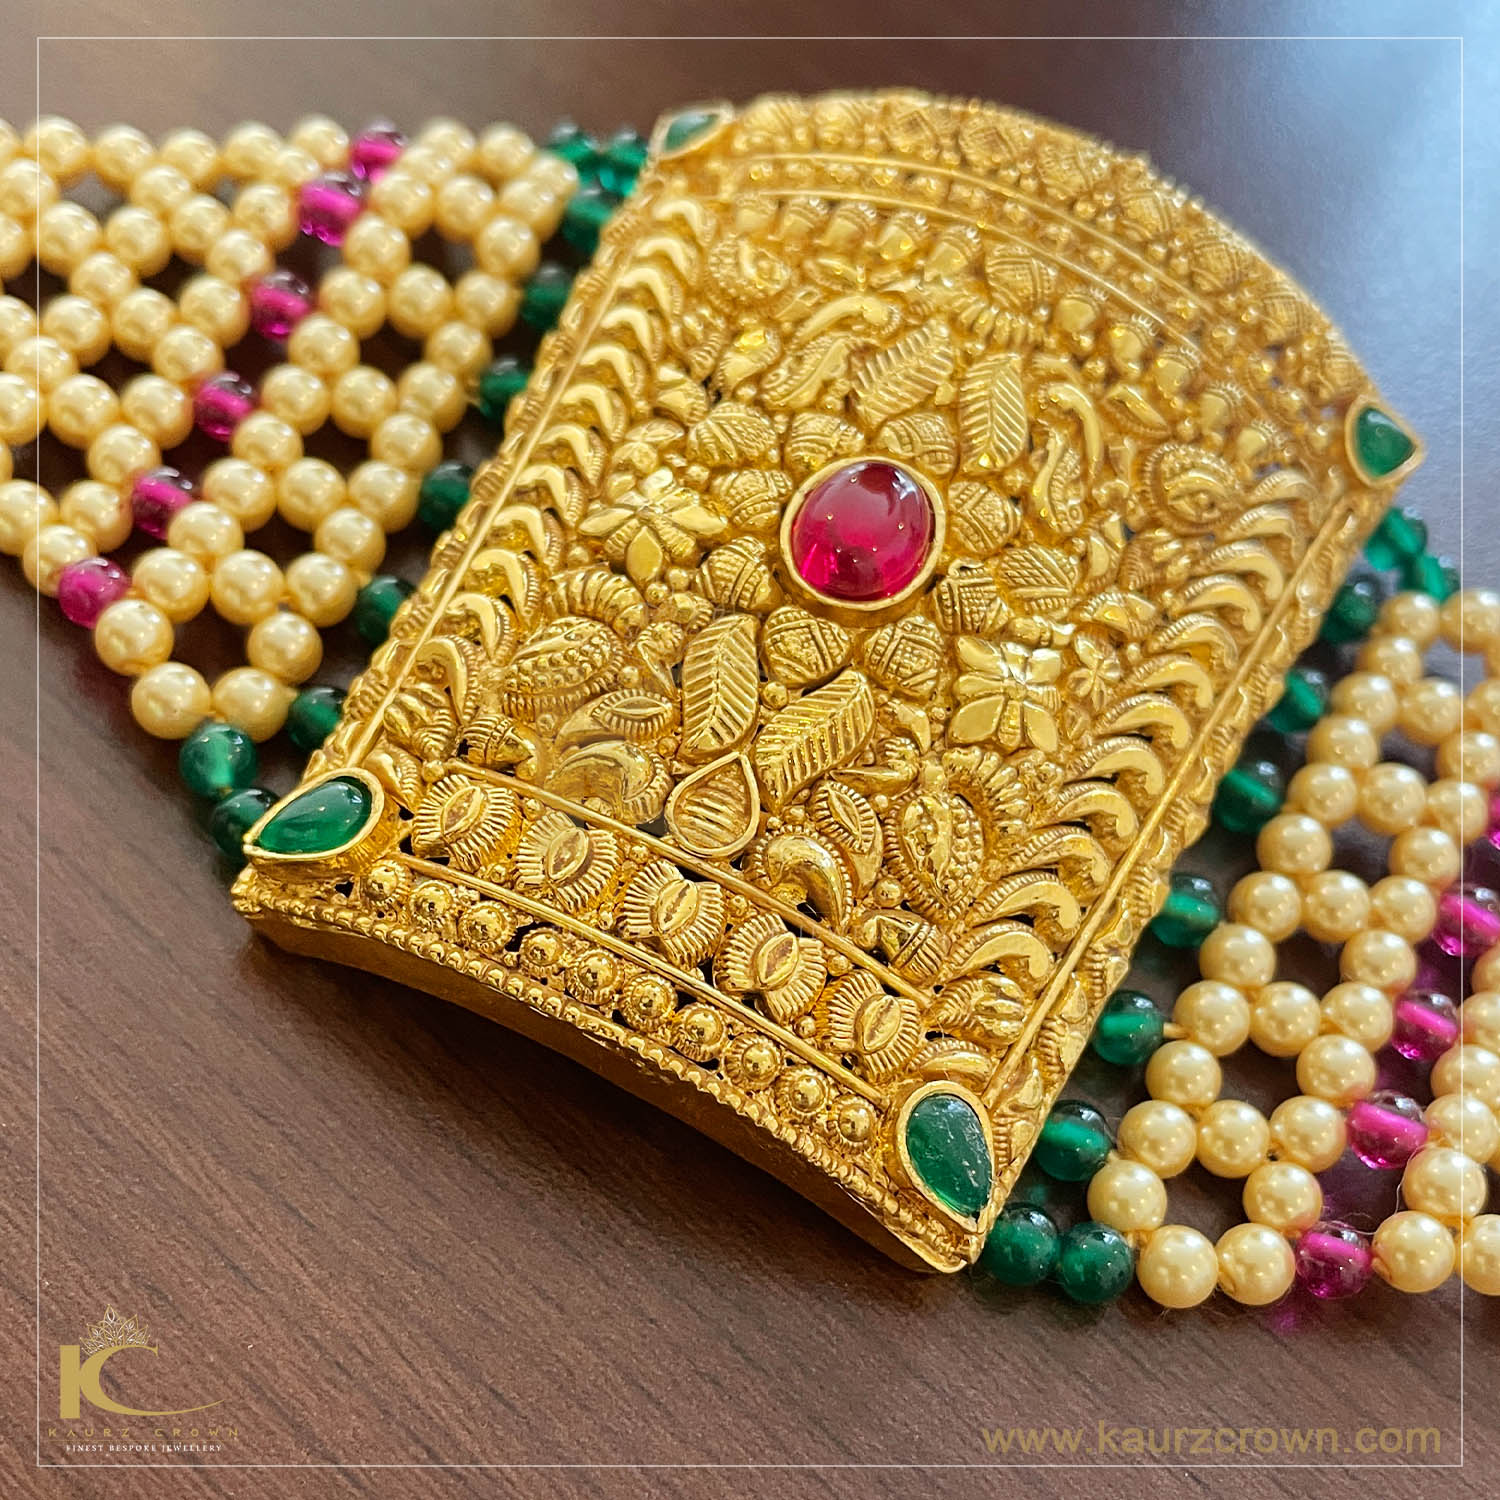 Traditional Design Gold Gilded Silver Bracelet or Bangle Rajasthan India 